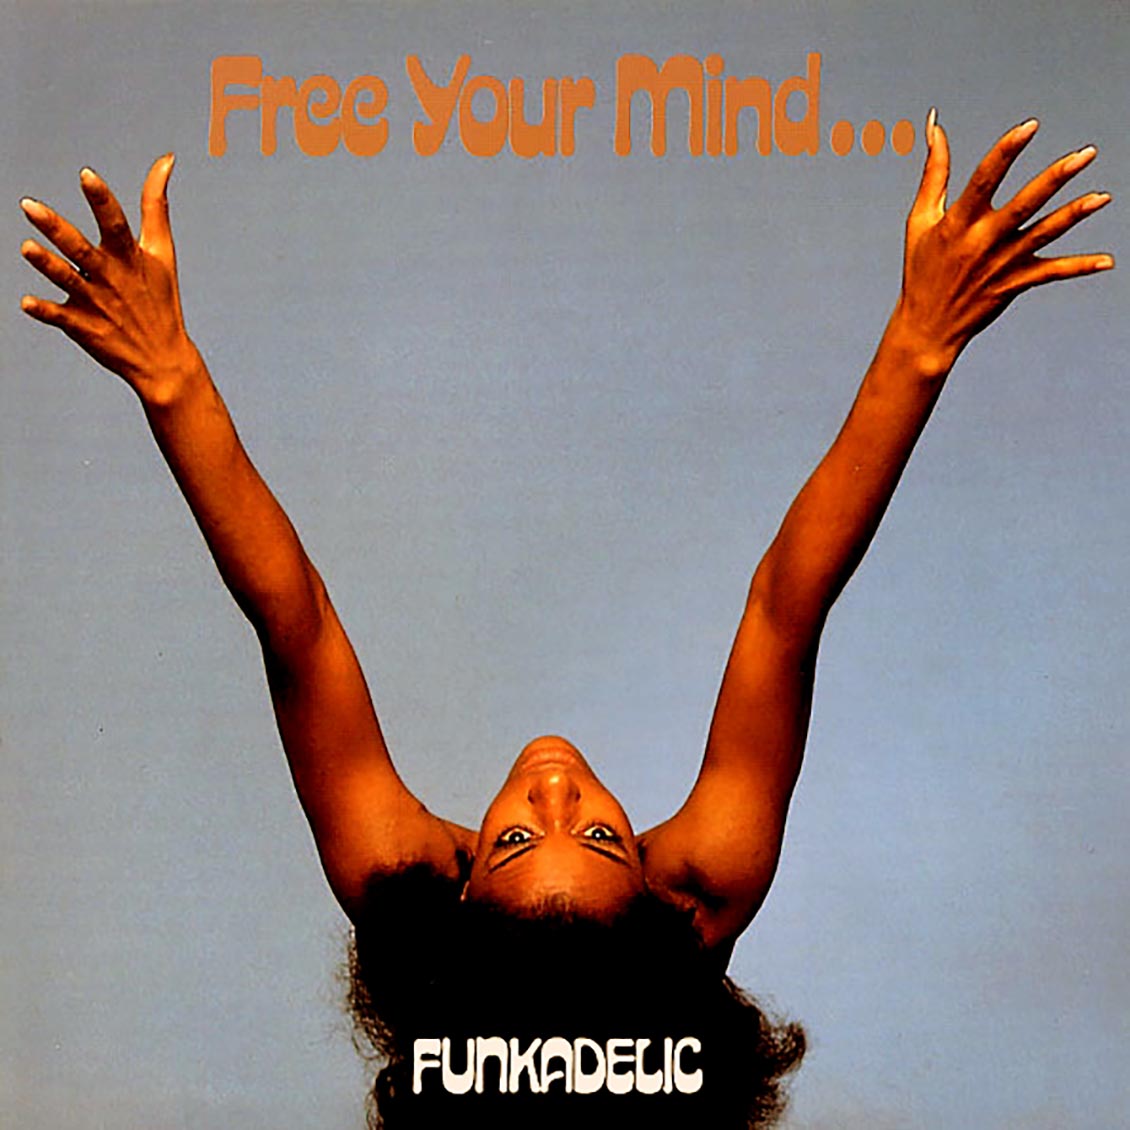 Funkadelic - Free Your Mind... [1990 Reissue] [New Vinyl Record LP]